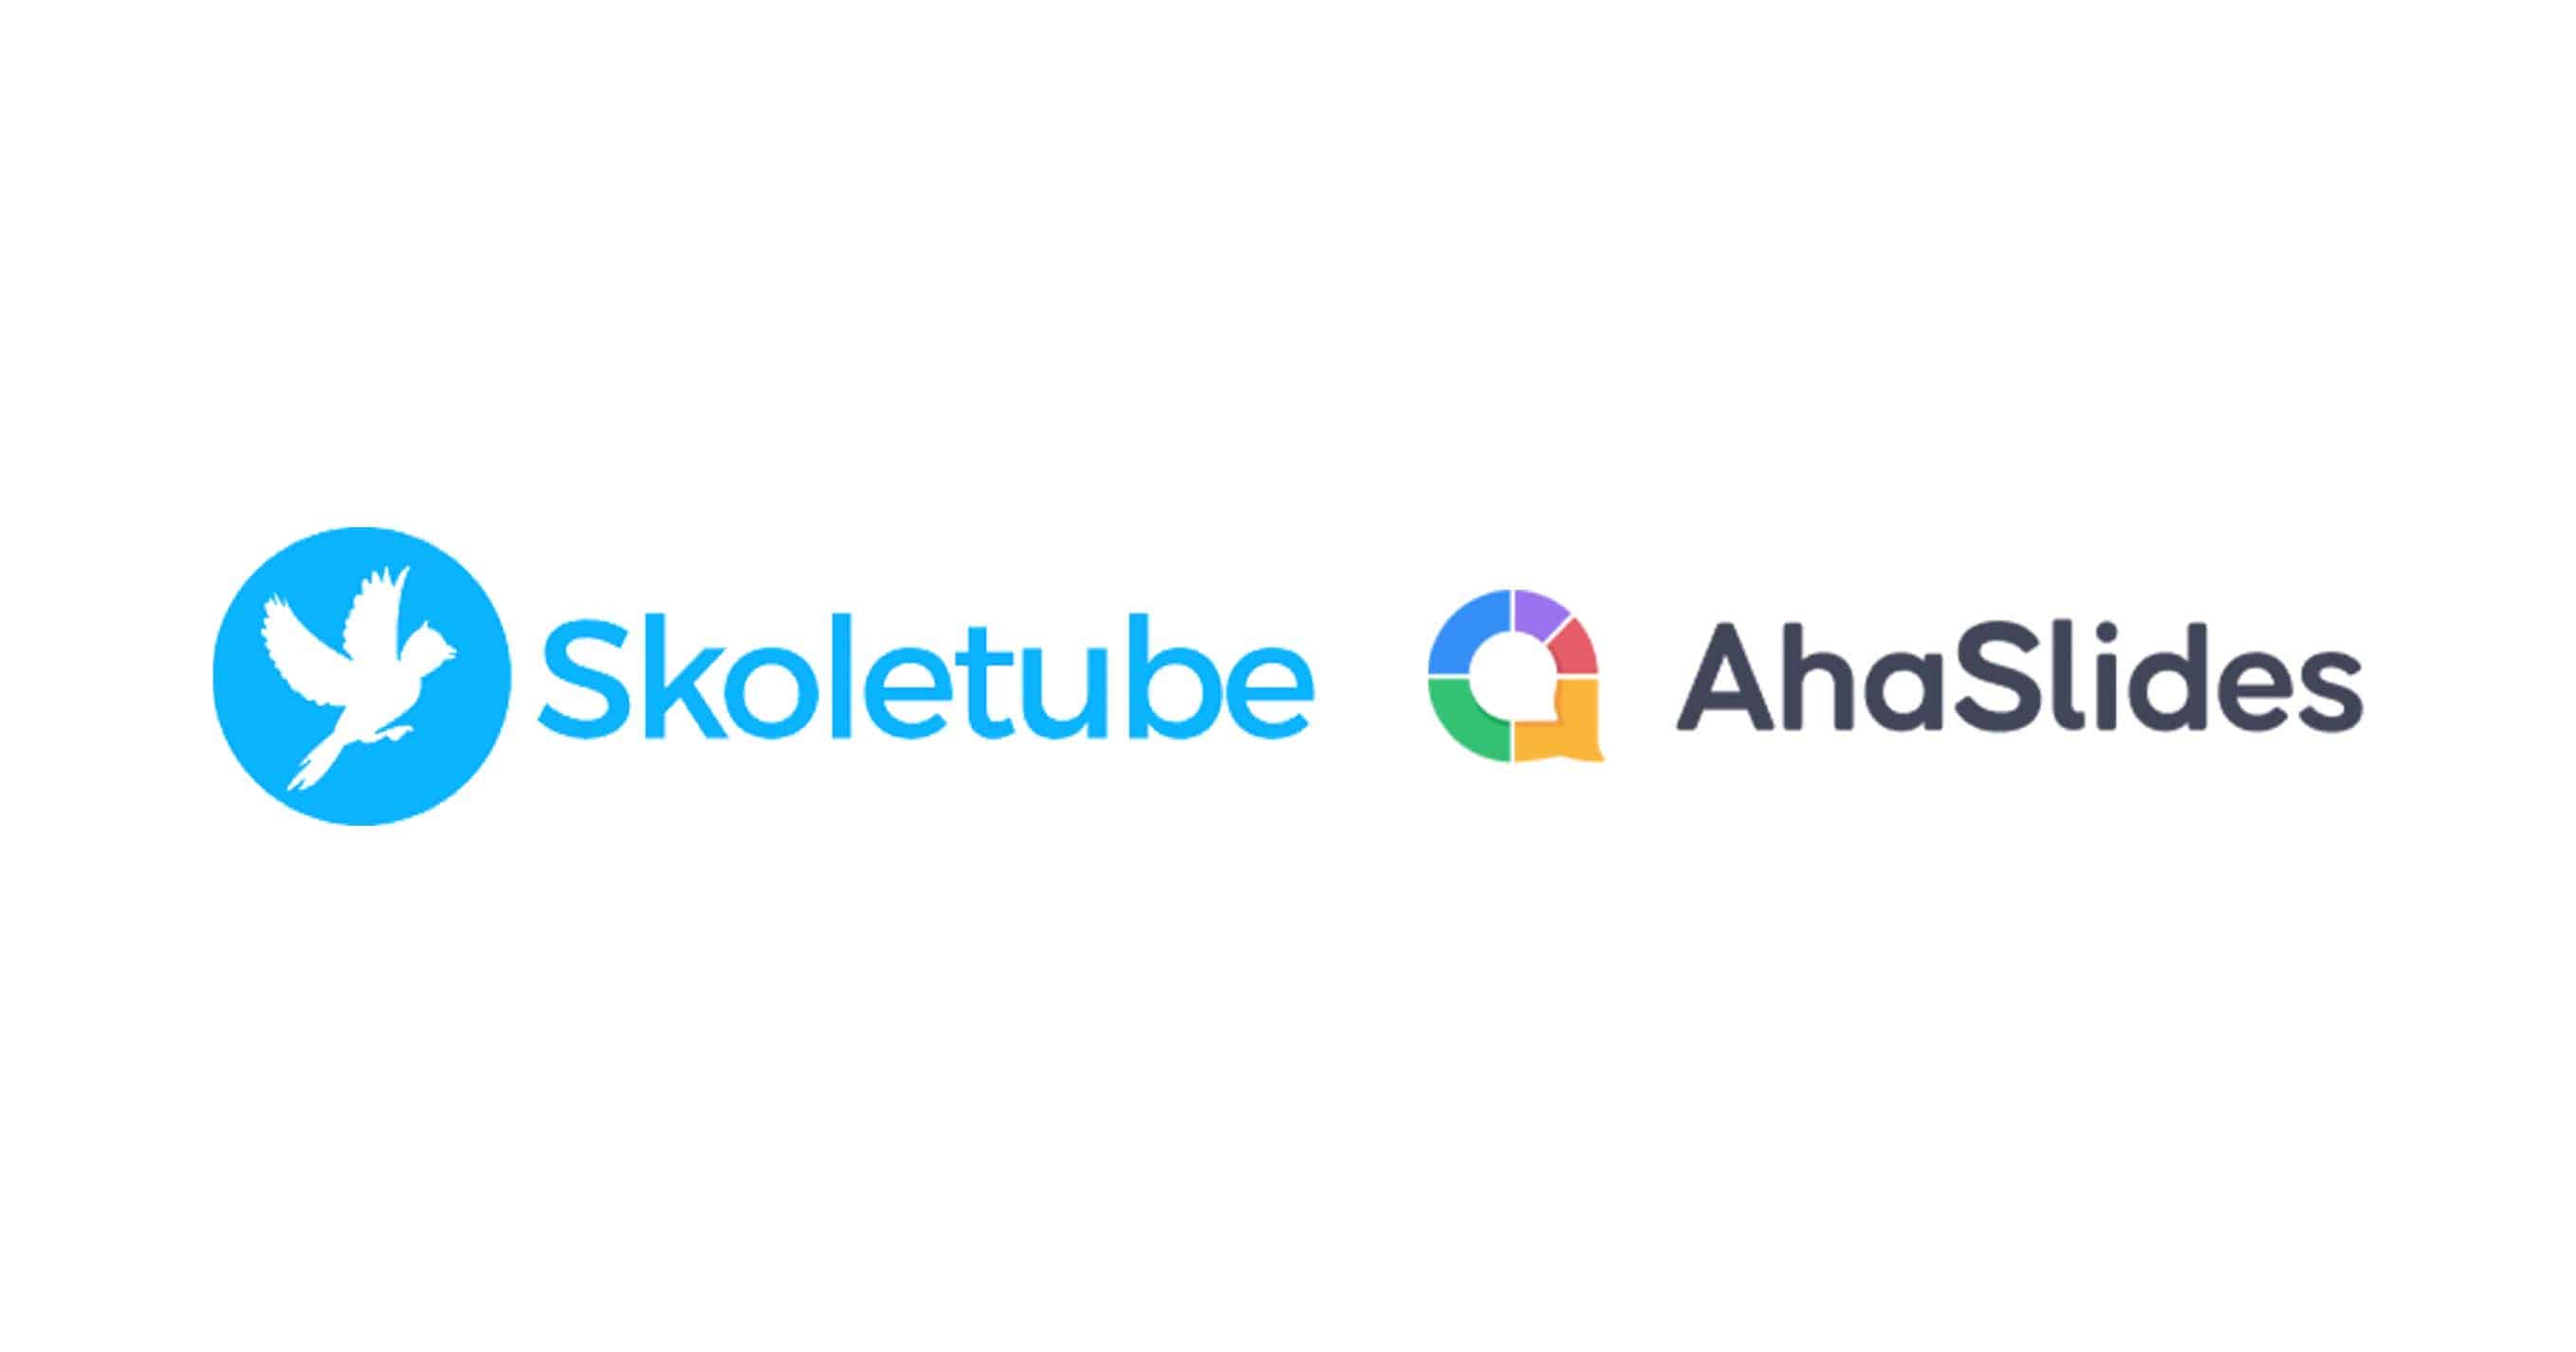 SkoleTube and AhaSlides: A New Partnership Bringing Interactive Edtech to Denmark